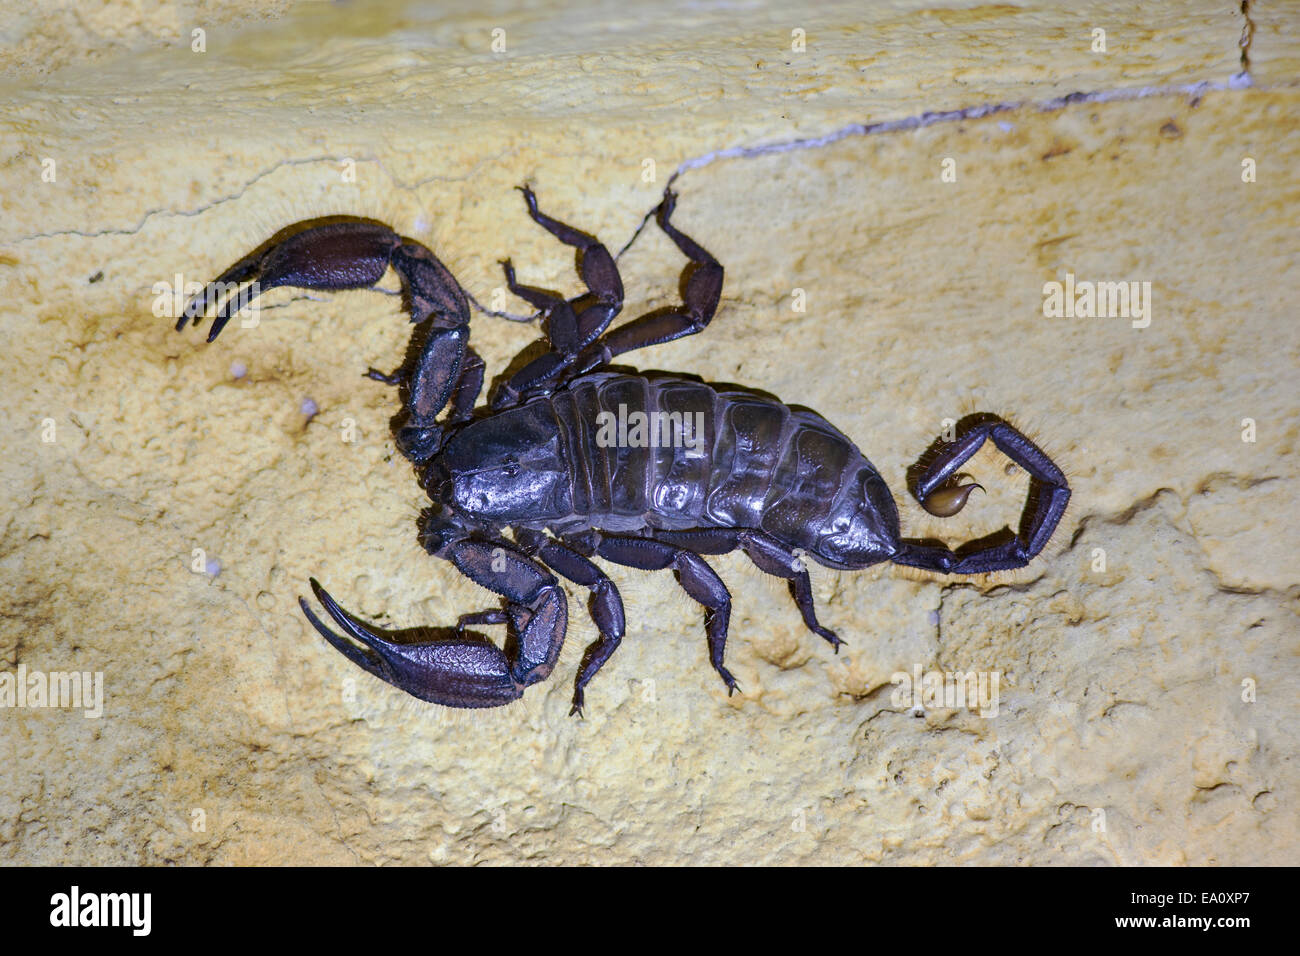 South African rock scorpion (flat rock scorpion) (Hadogenes troglodytes), North West province, South Africa Stock Photo